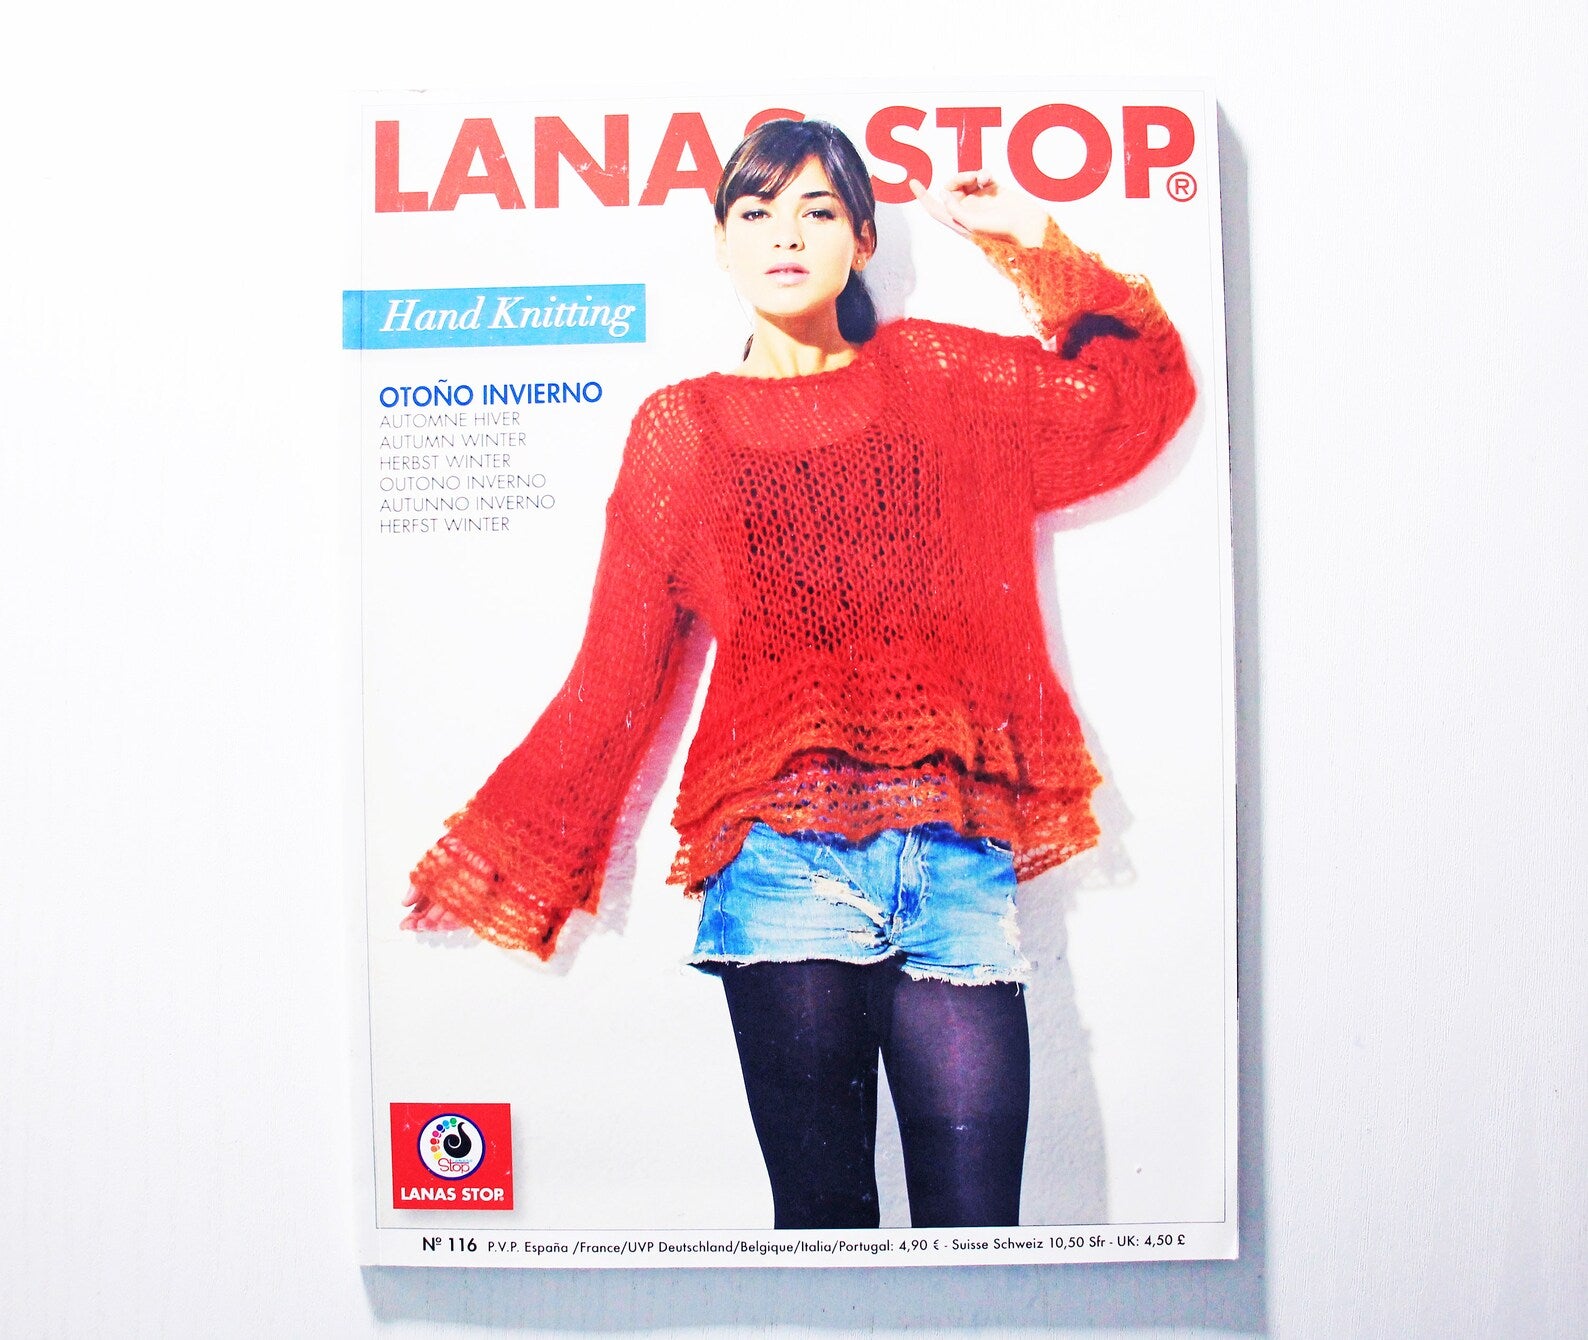 Lanas Stop Magazines